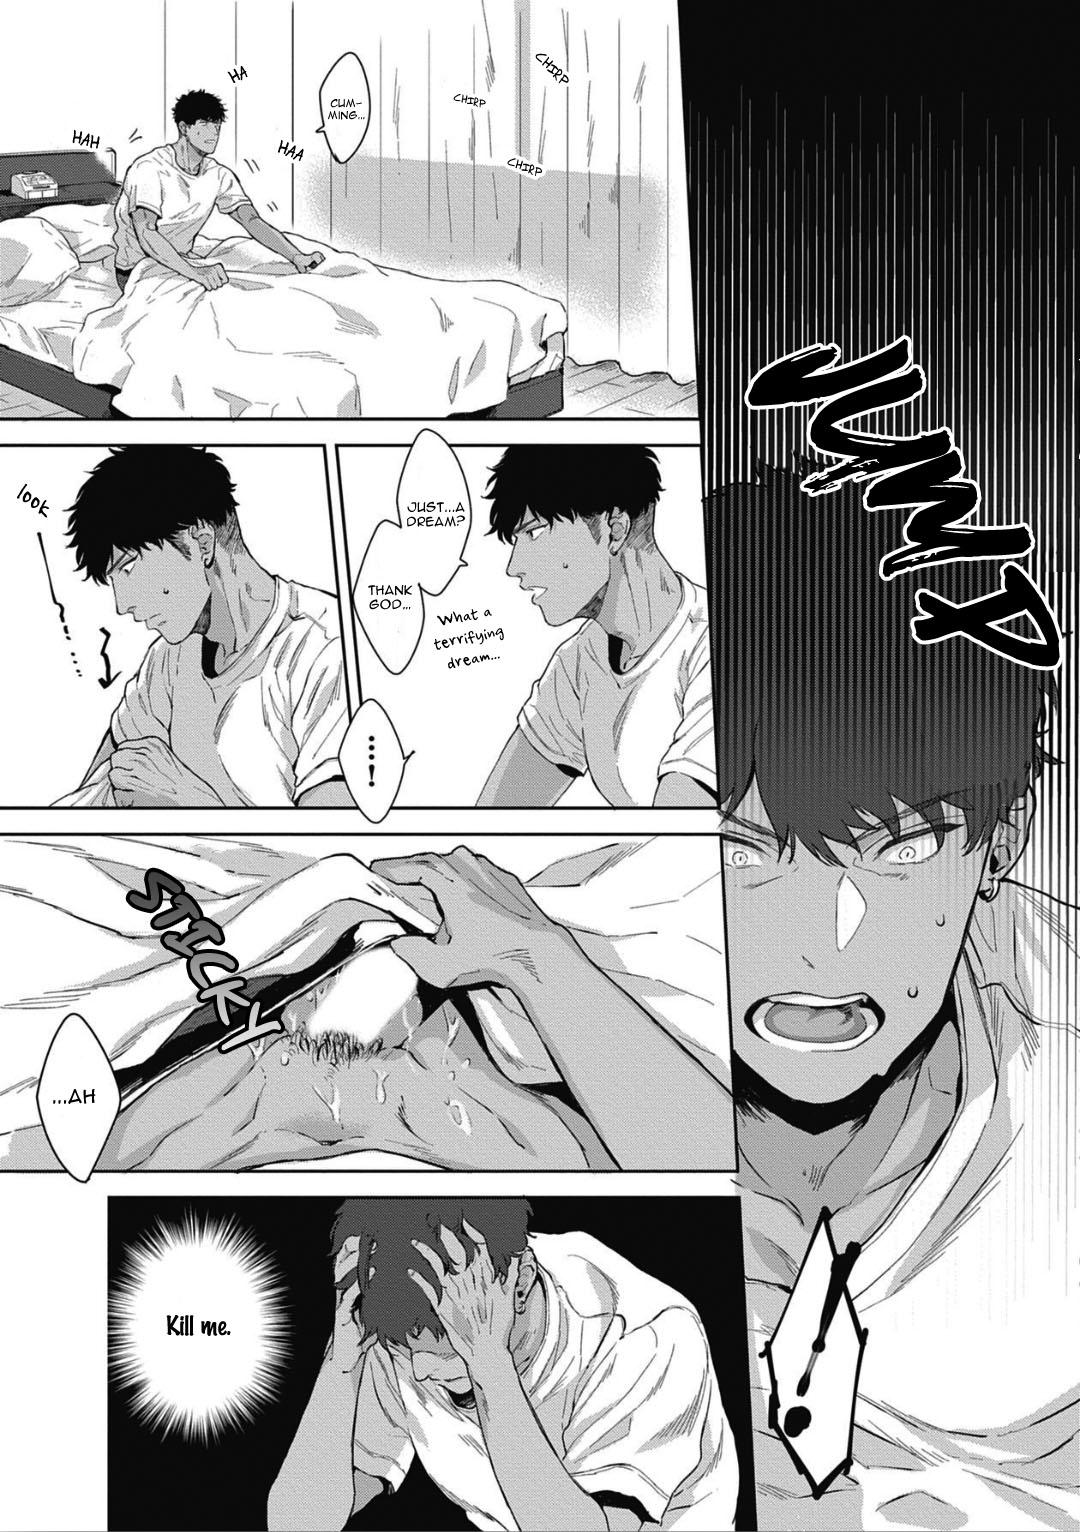 Iyarashii Mannequin Ch.1 Page 12 - Mangago